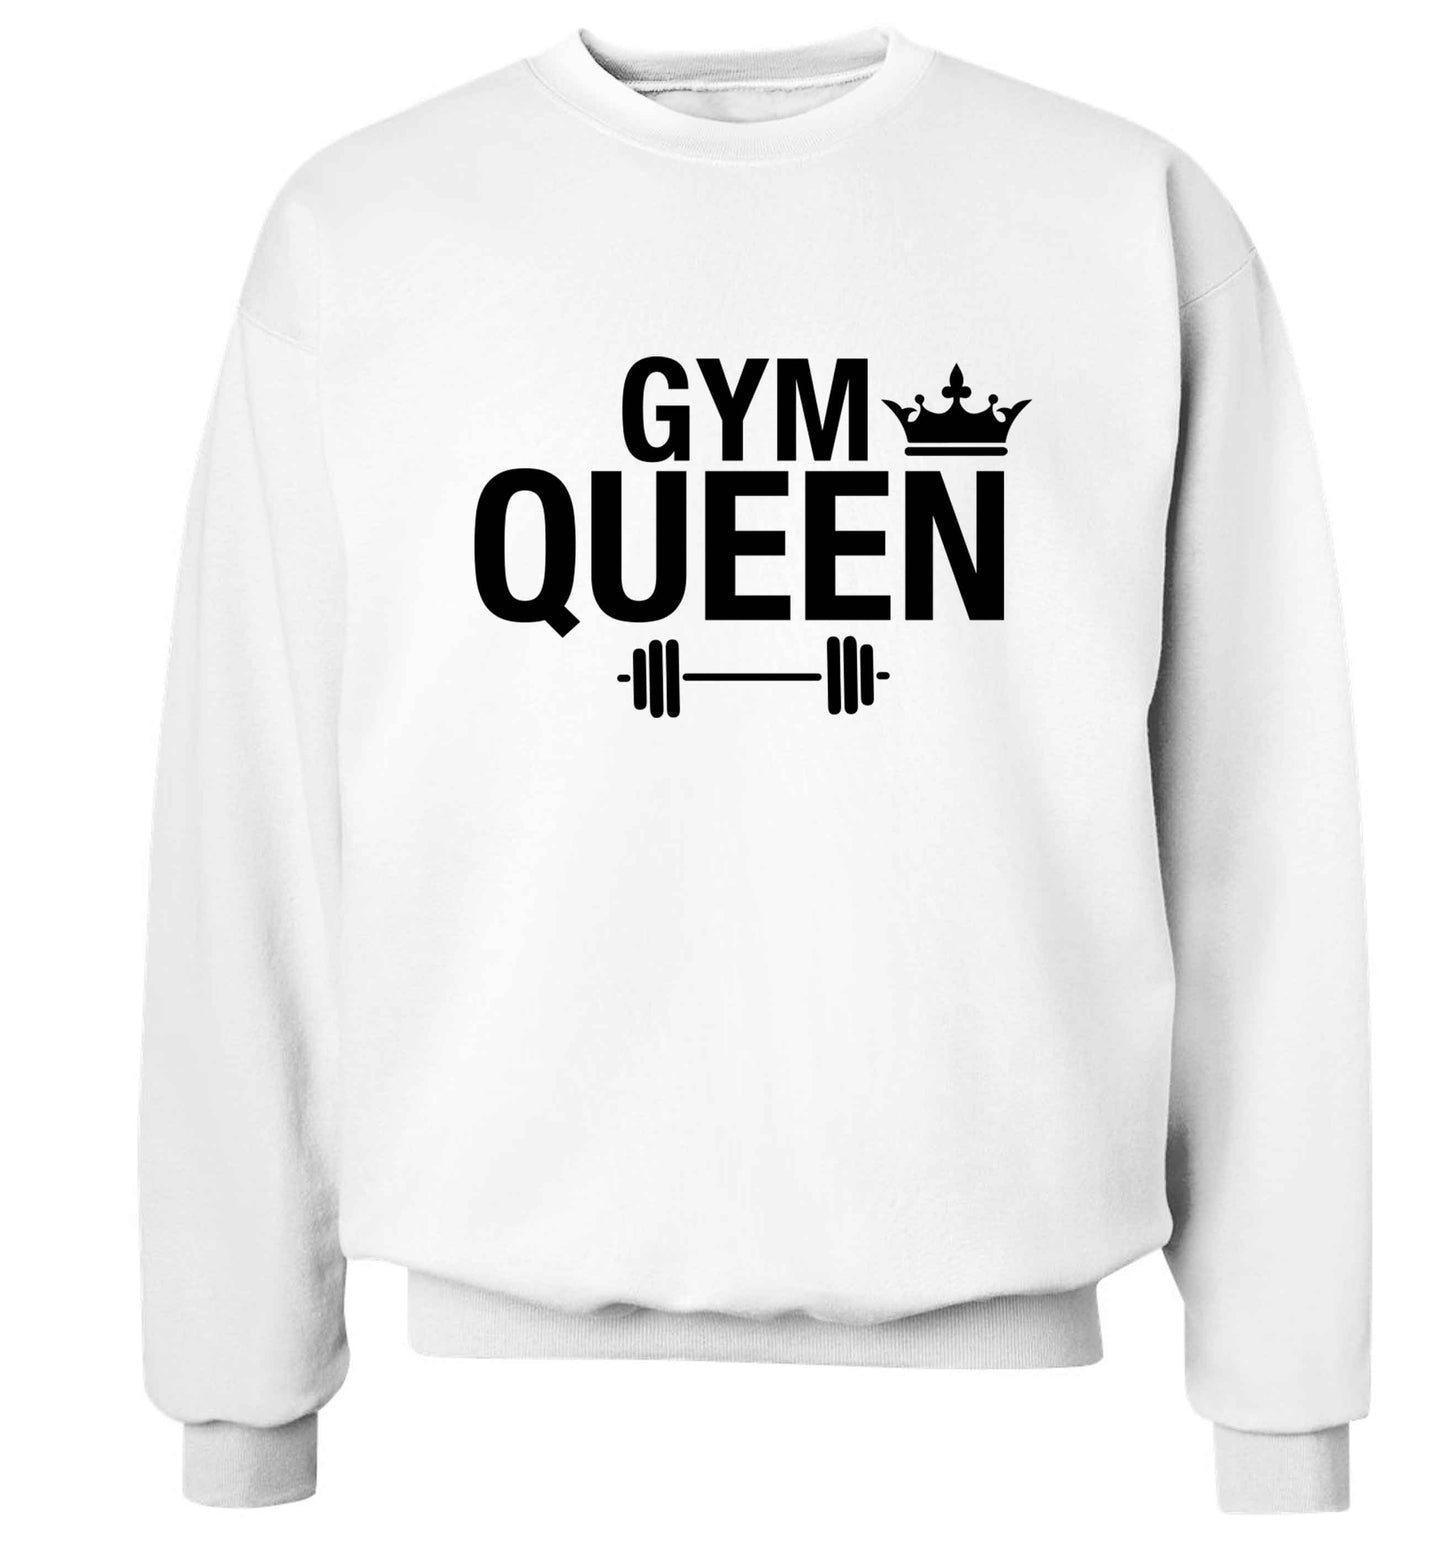 Gym queen Adult's unisex white Sweater 2XL